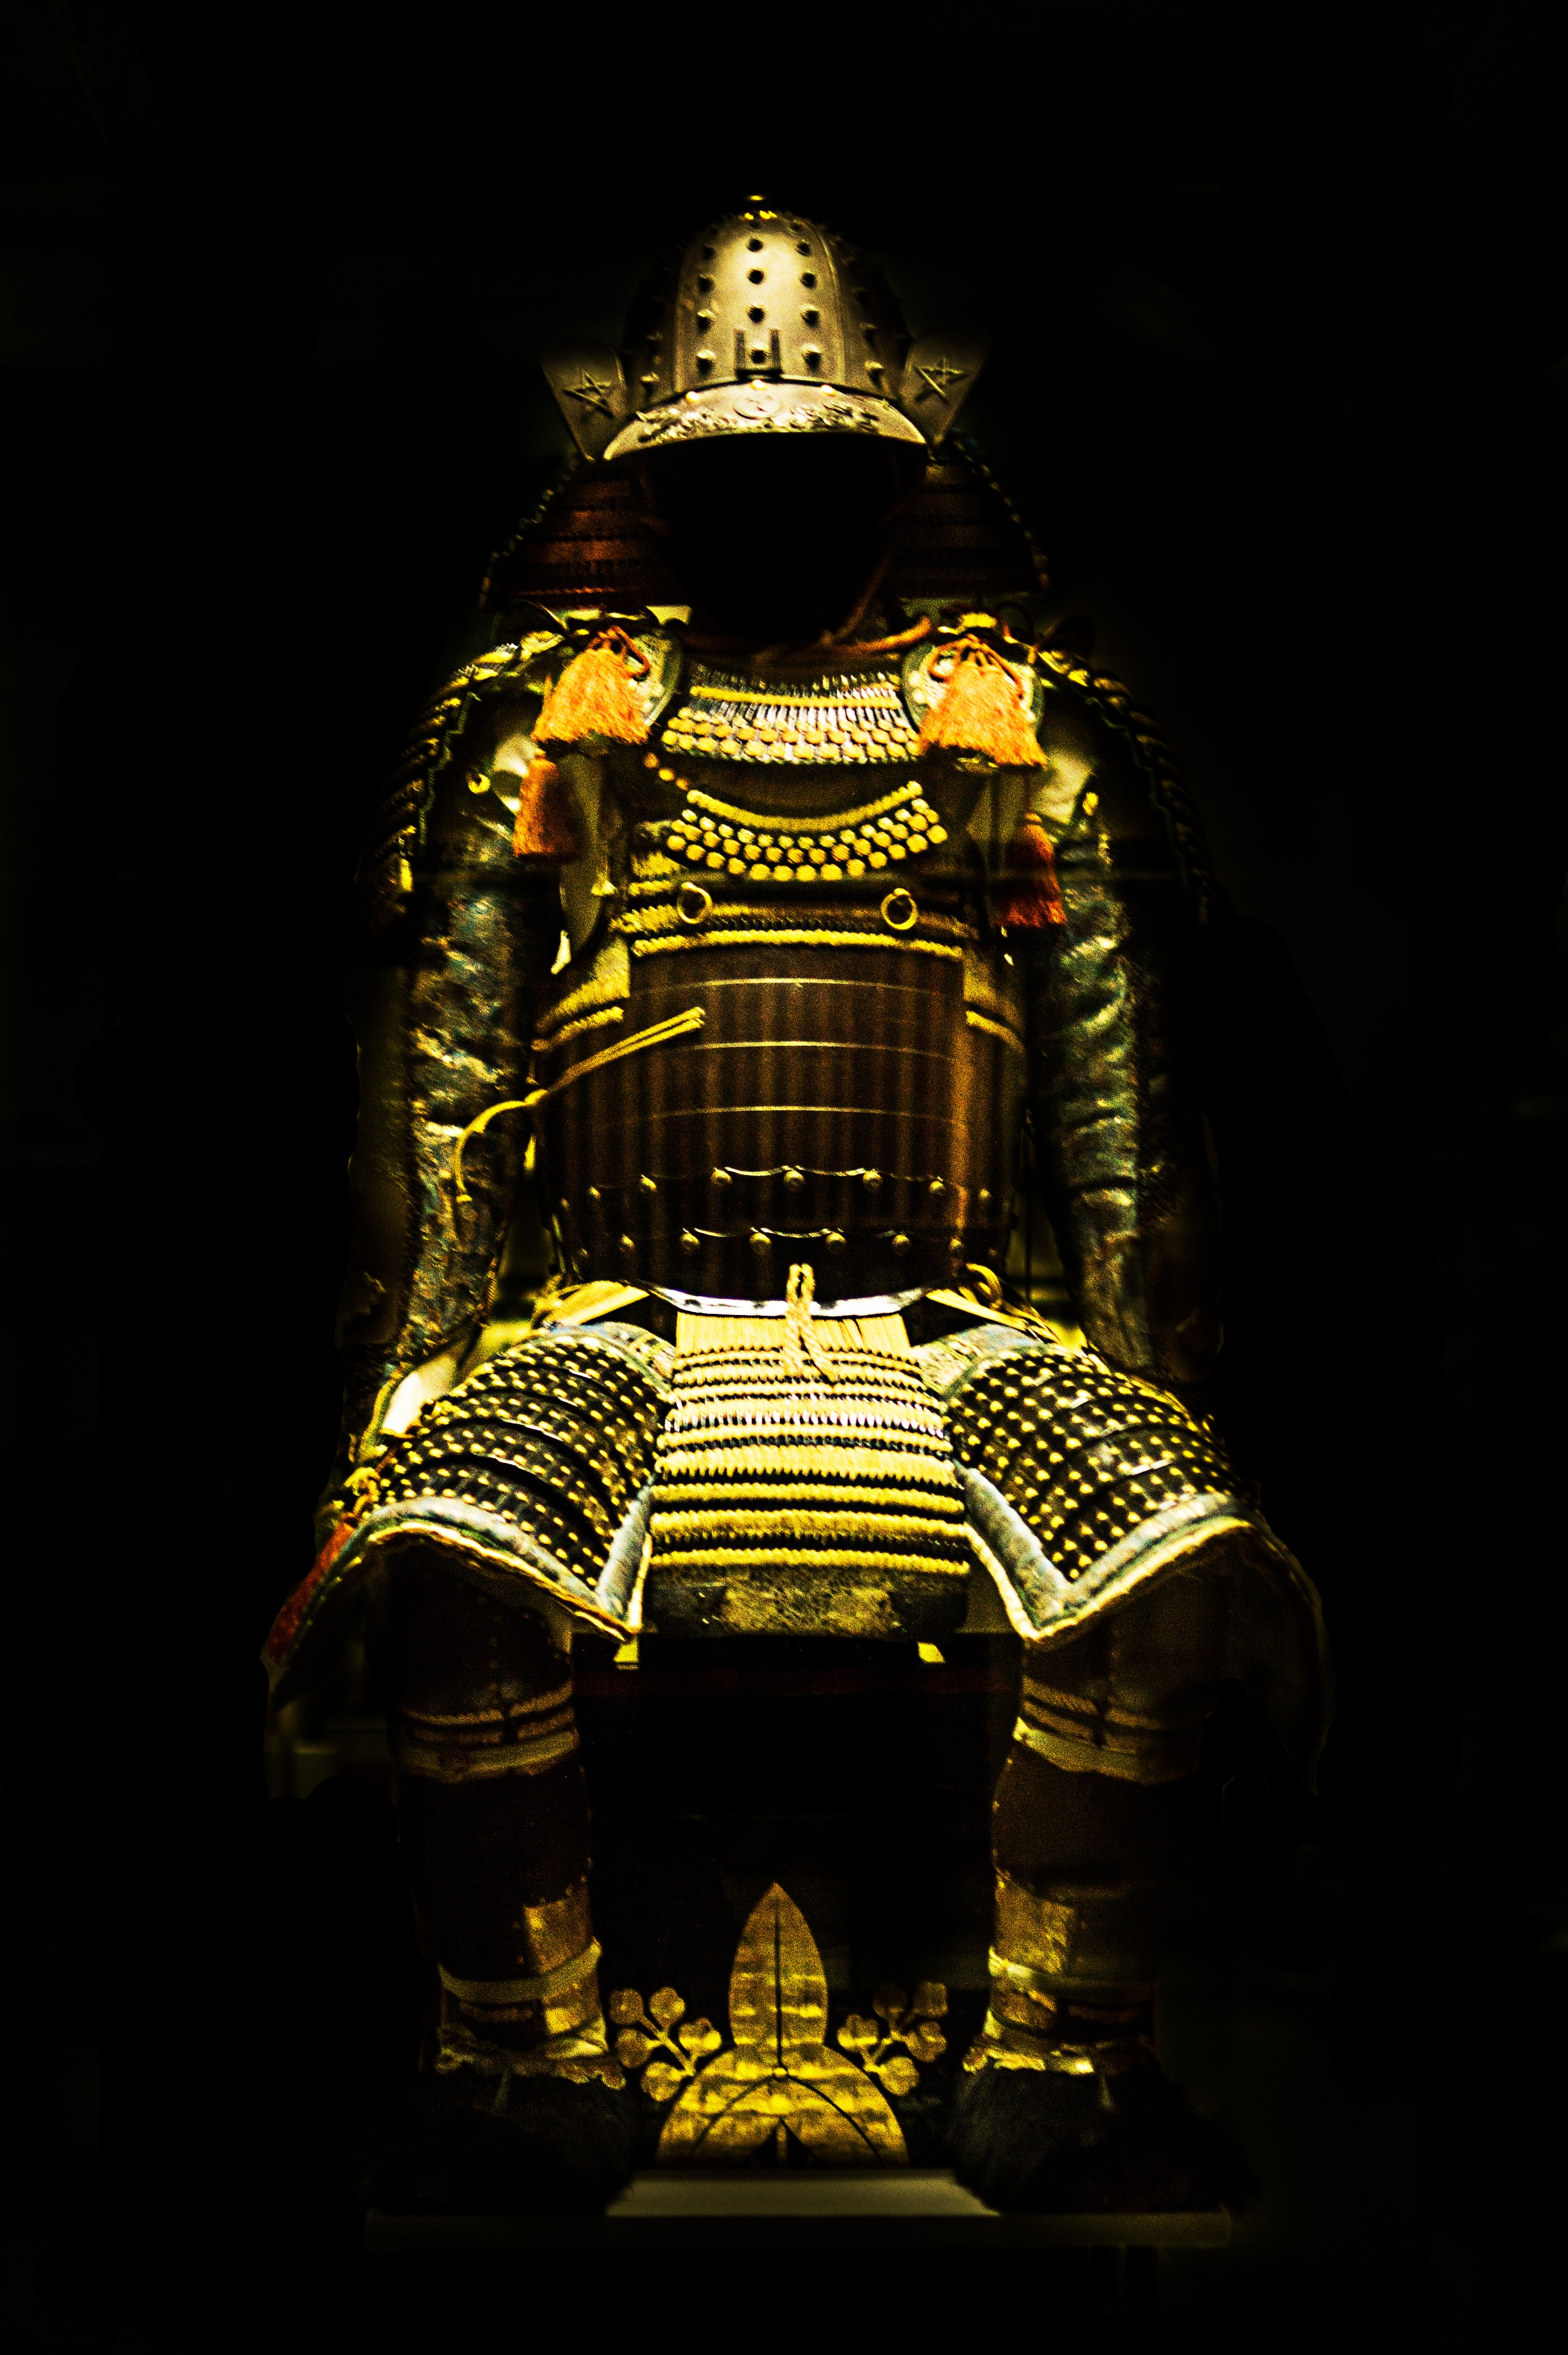 brass knight armor